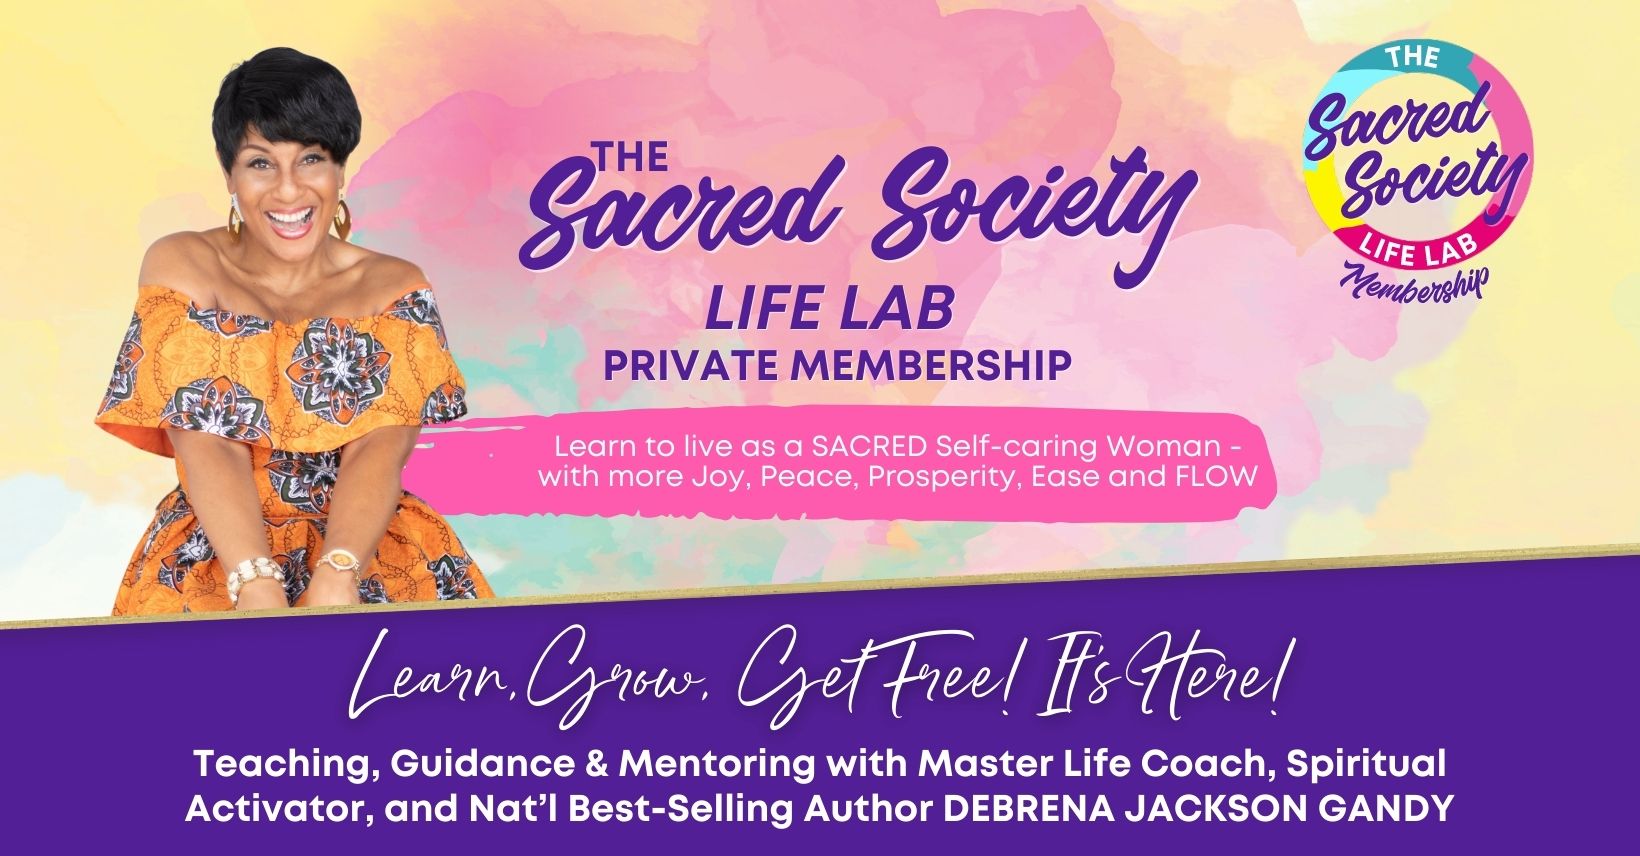 The Sacred Society Life Lab Private Membership